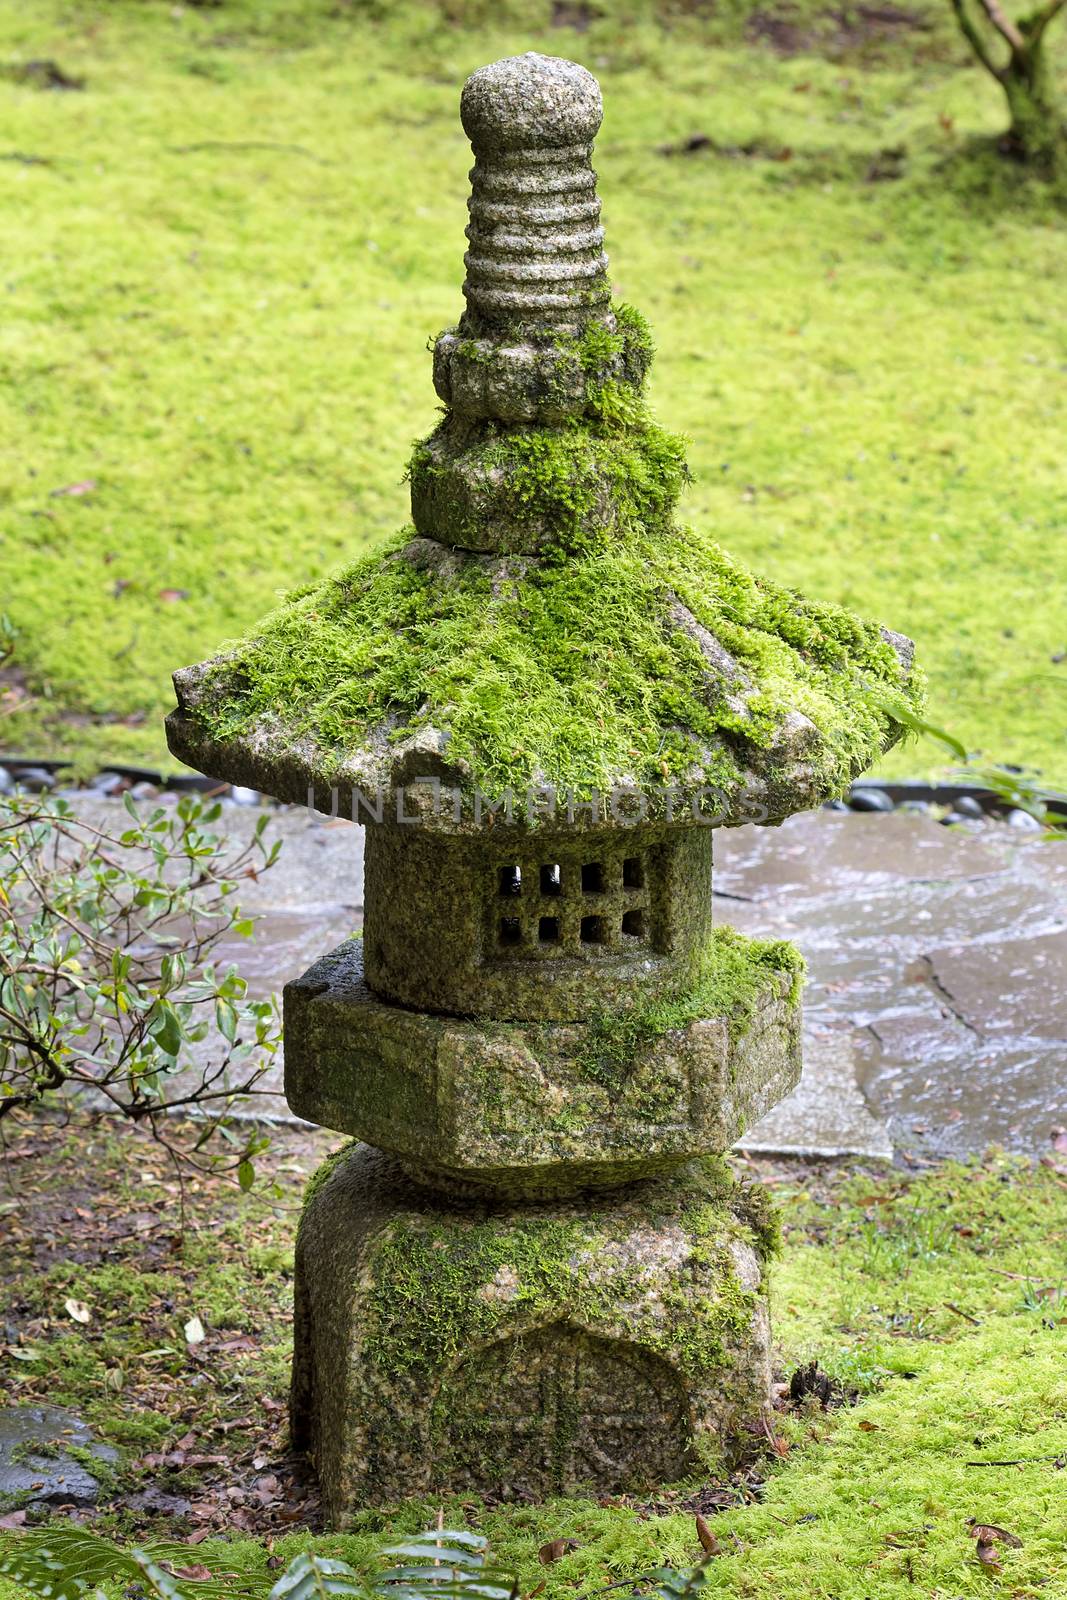 Old Stone Lantern at Japanese Garden by jpldesigns